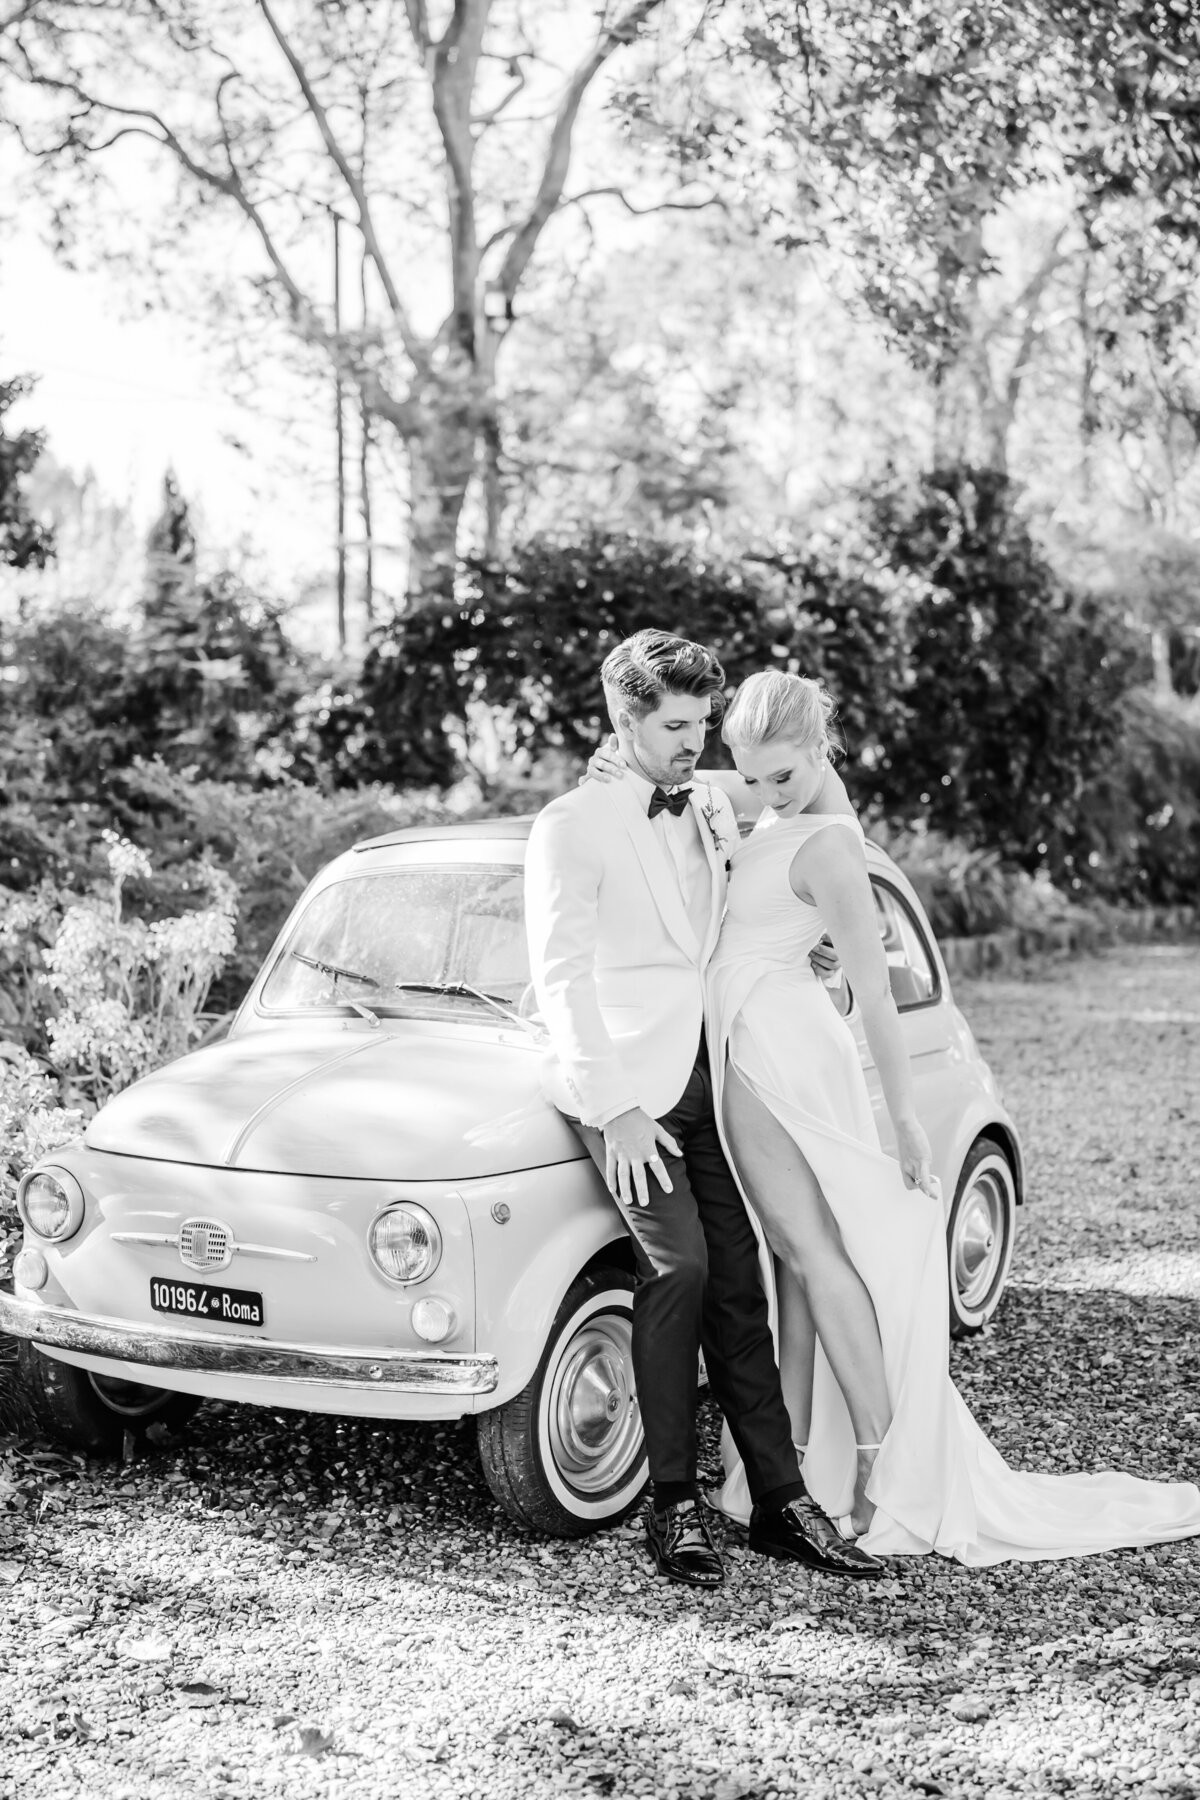 Sydney wedding blog featuring Italy-inspired ideas